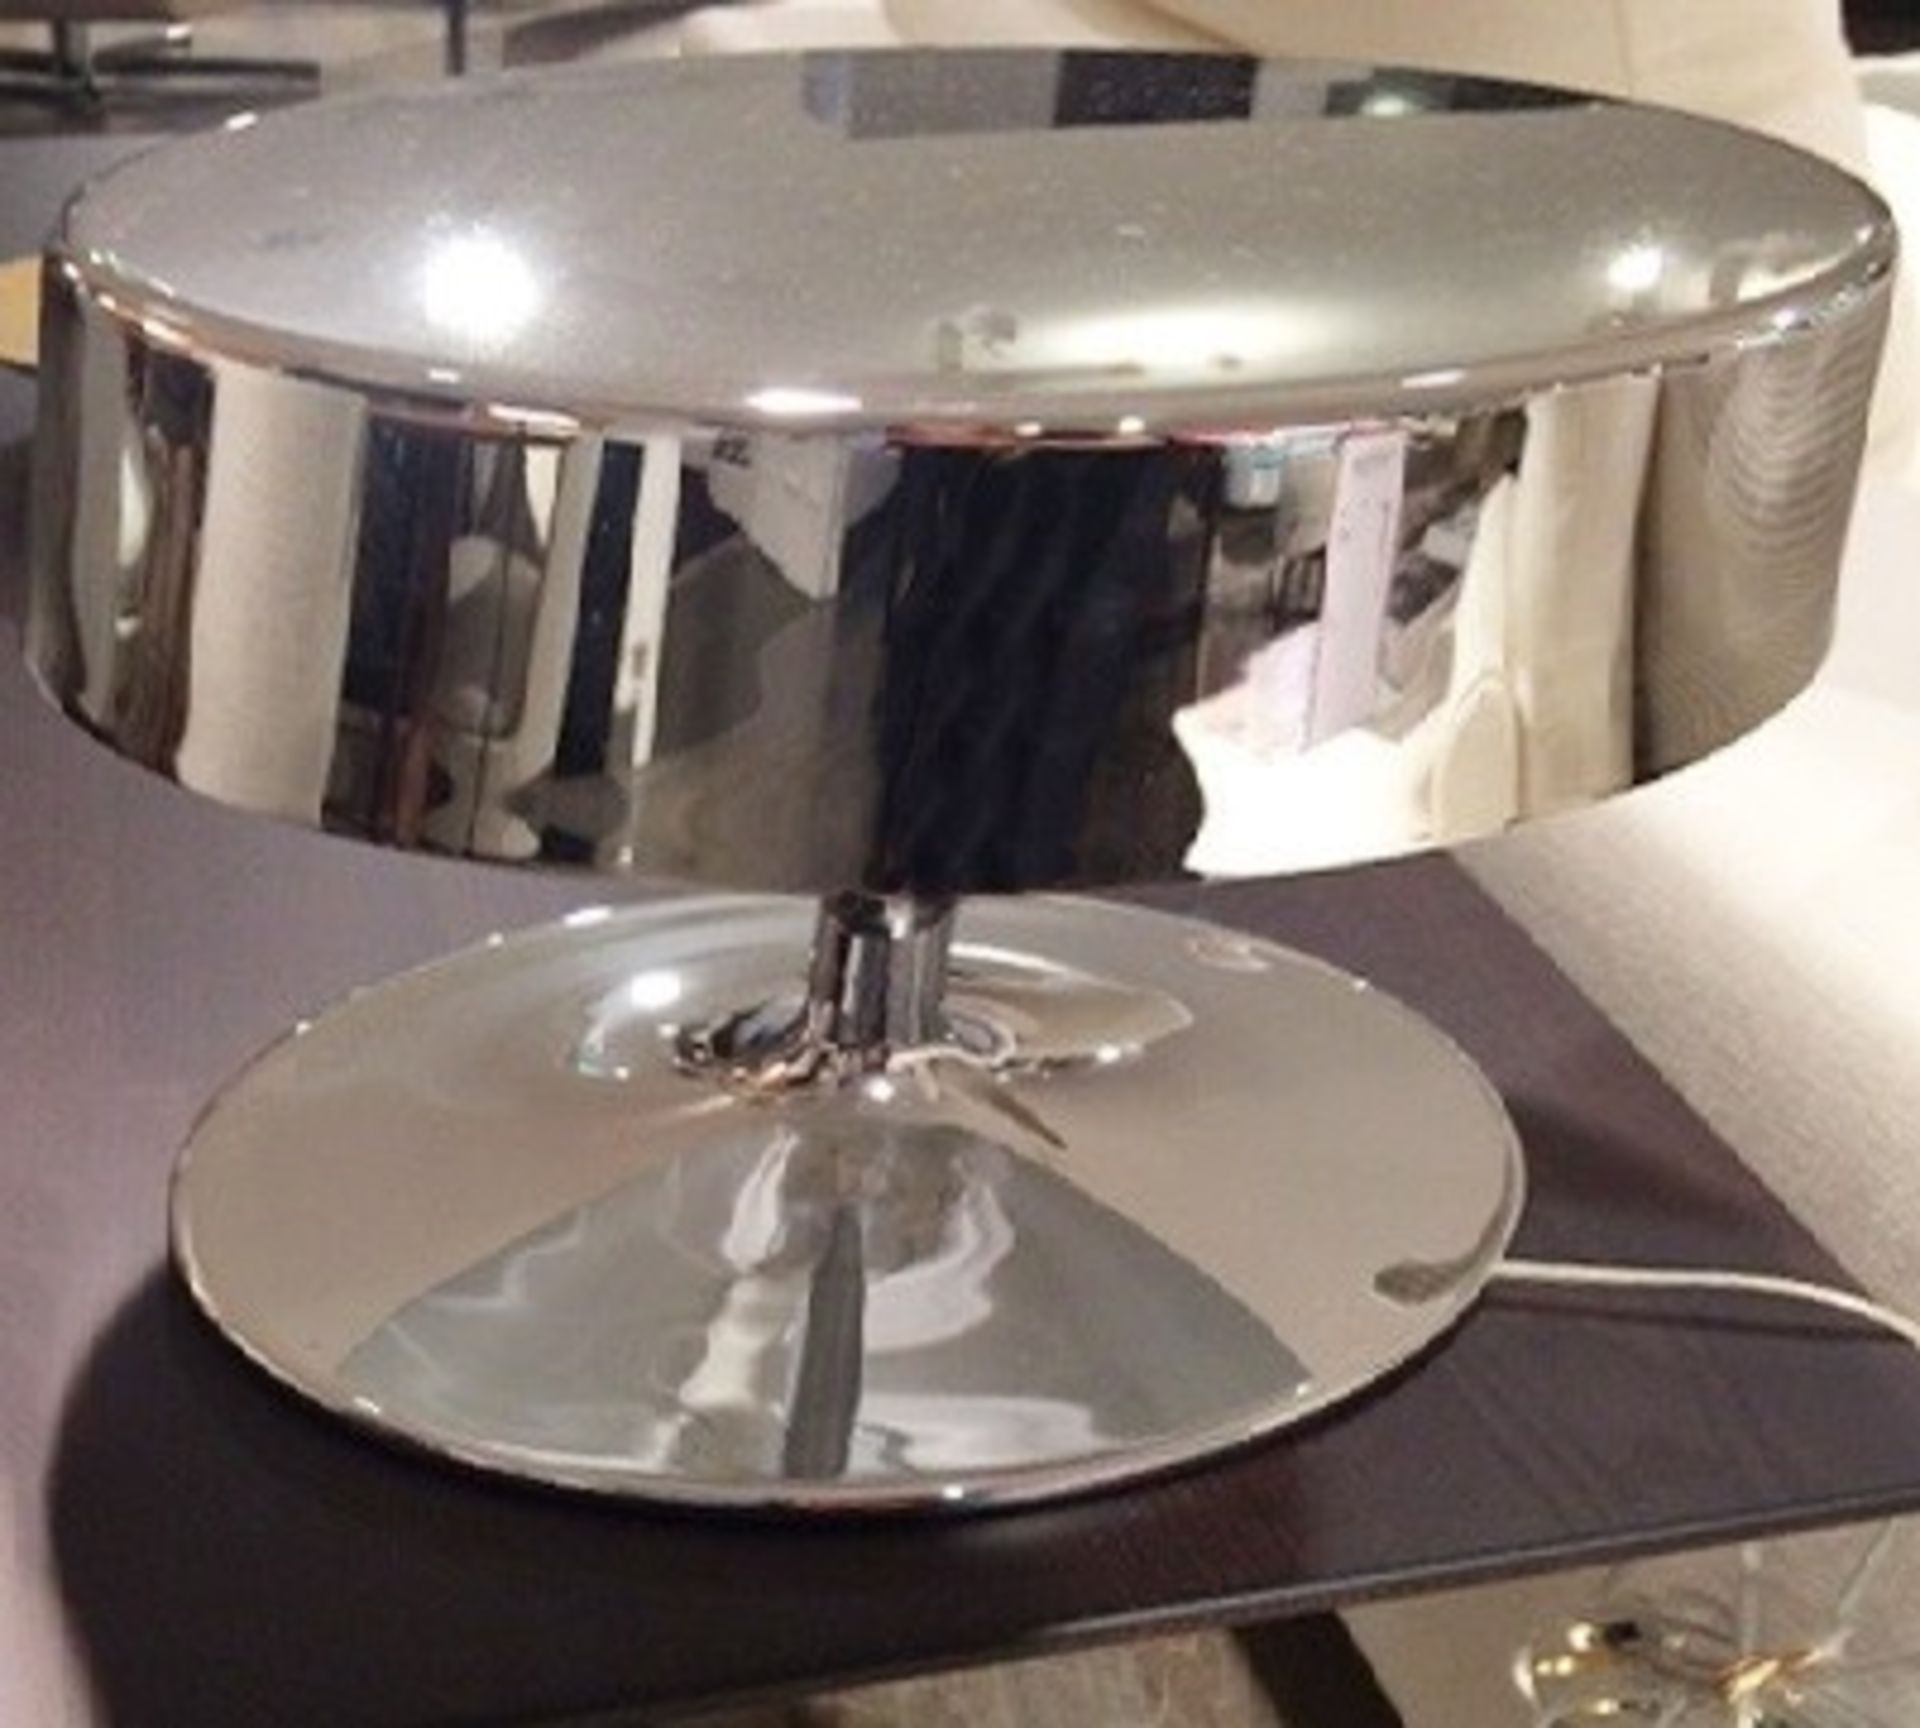 1 x PENTA "China" Medium Table Lamp - Chrome - Ref: 3168959 - CL087 - Location: Altrincham WA14 - - Image 2 of 6